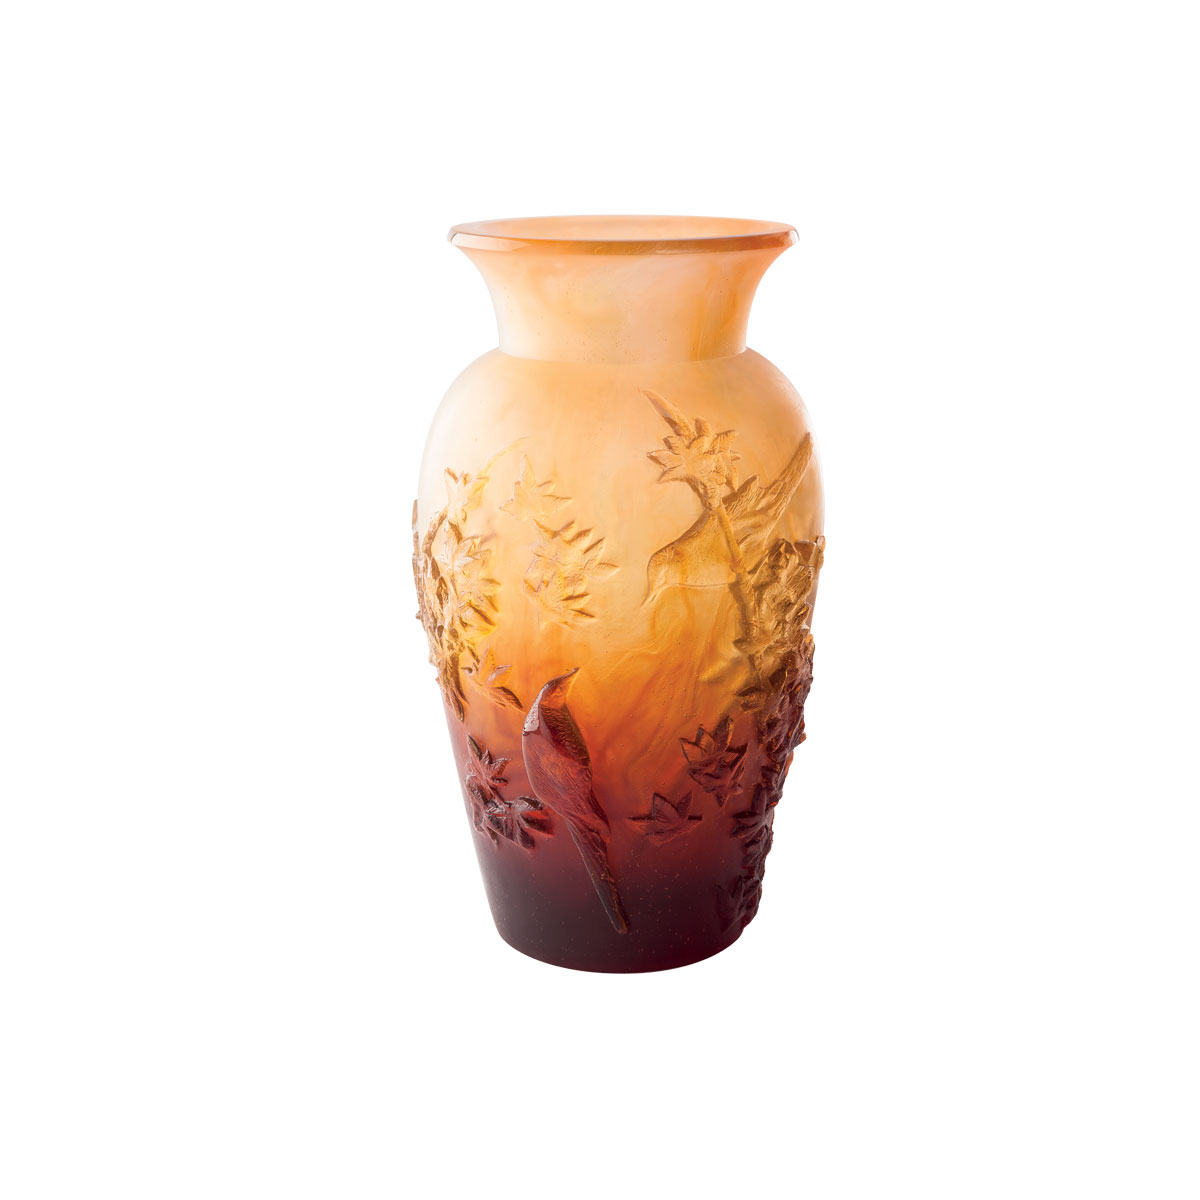 Daum 14.1" Autumn Vase by Shogo Kariyazaki, Limited Edition in Amber